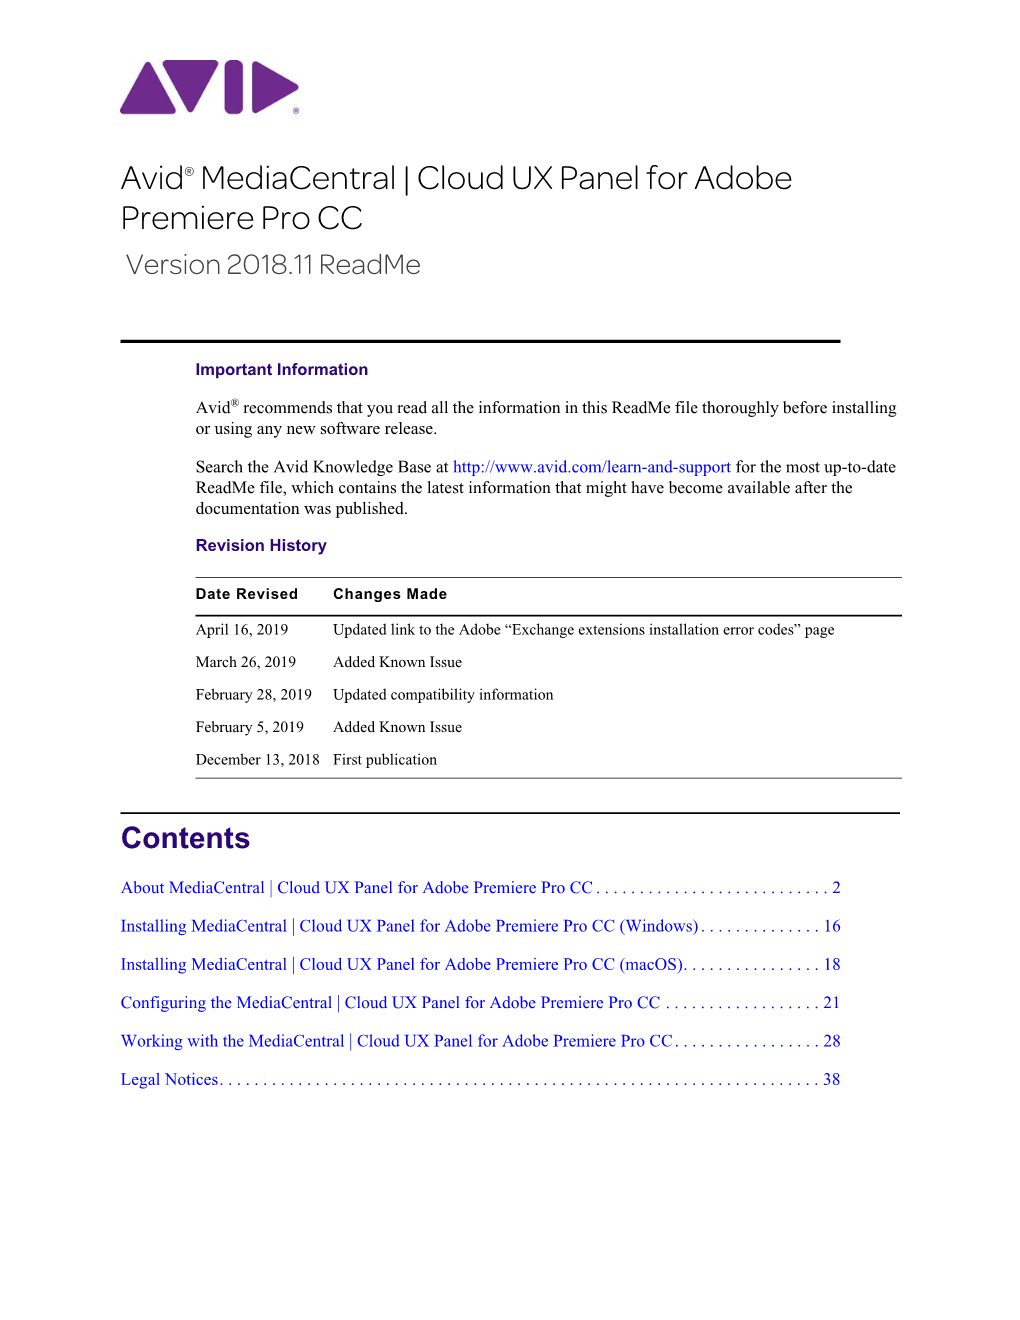 Mediacentral | Cloud UX Panel for Adobe Premiere Pro CC Readme